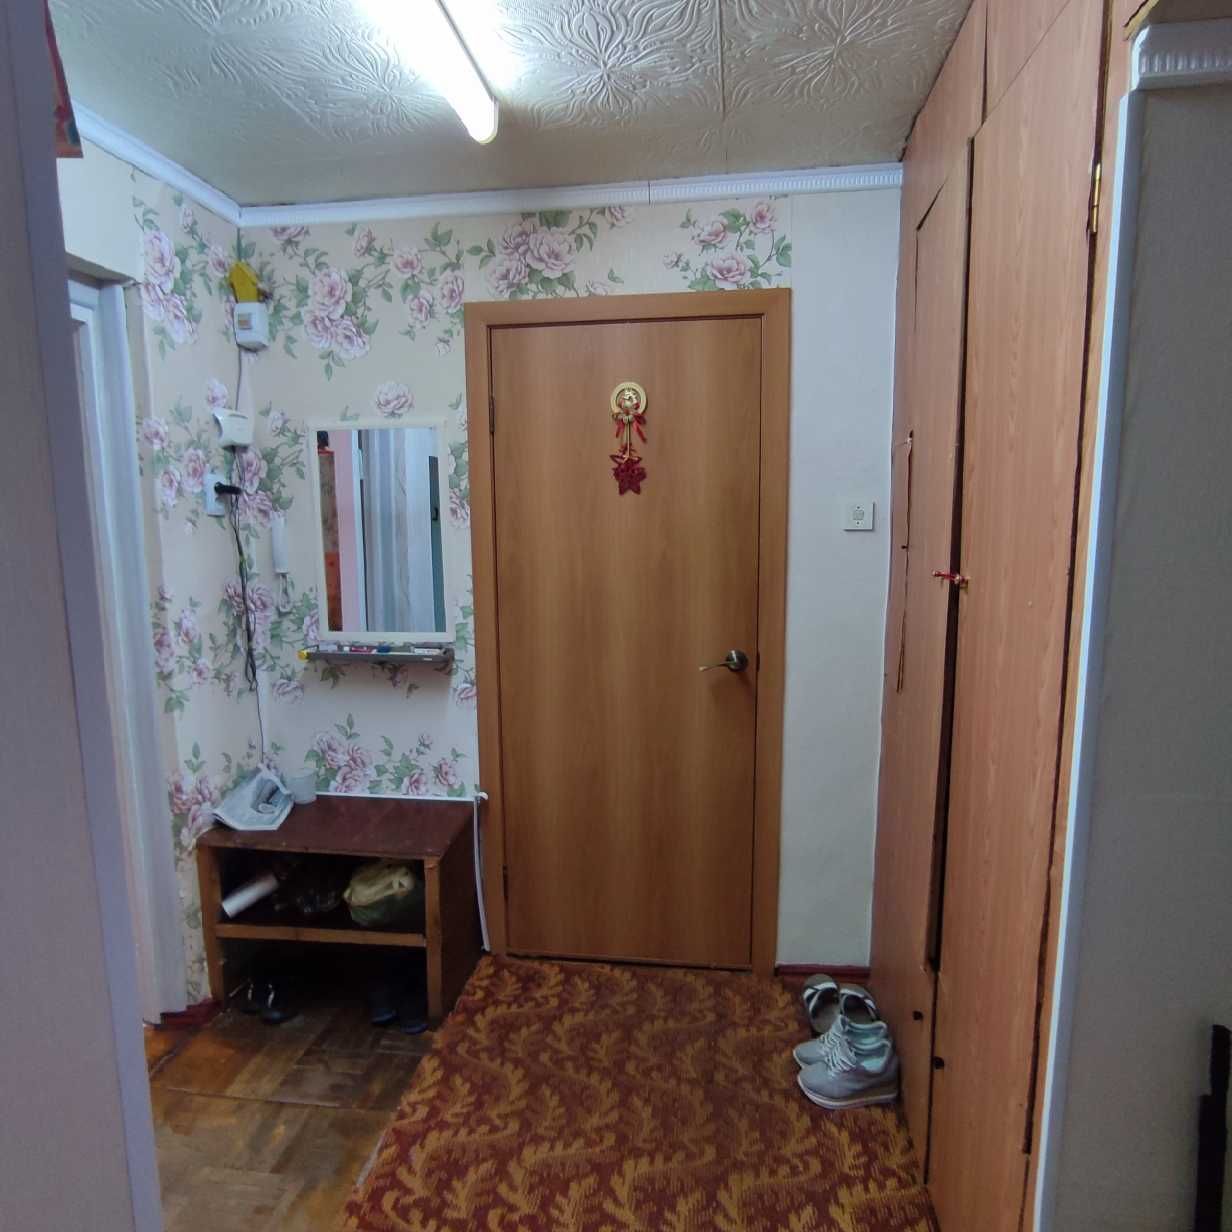 1203Продается 3х квартира У/П за ТД "Алтын-Арай" (Квадратный коридор)